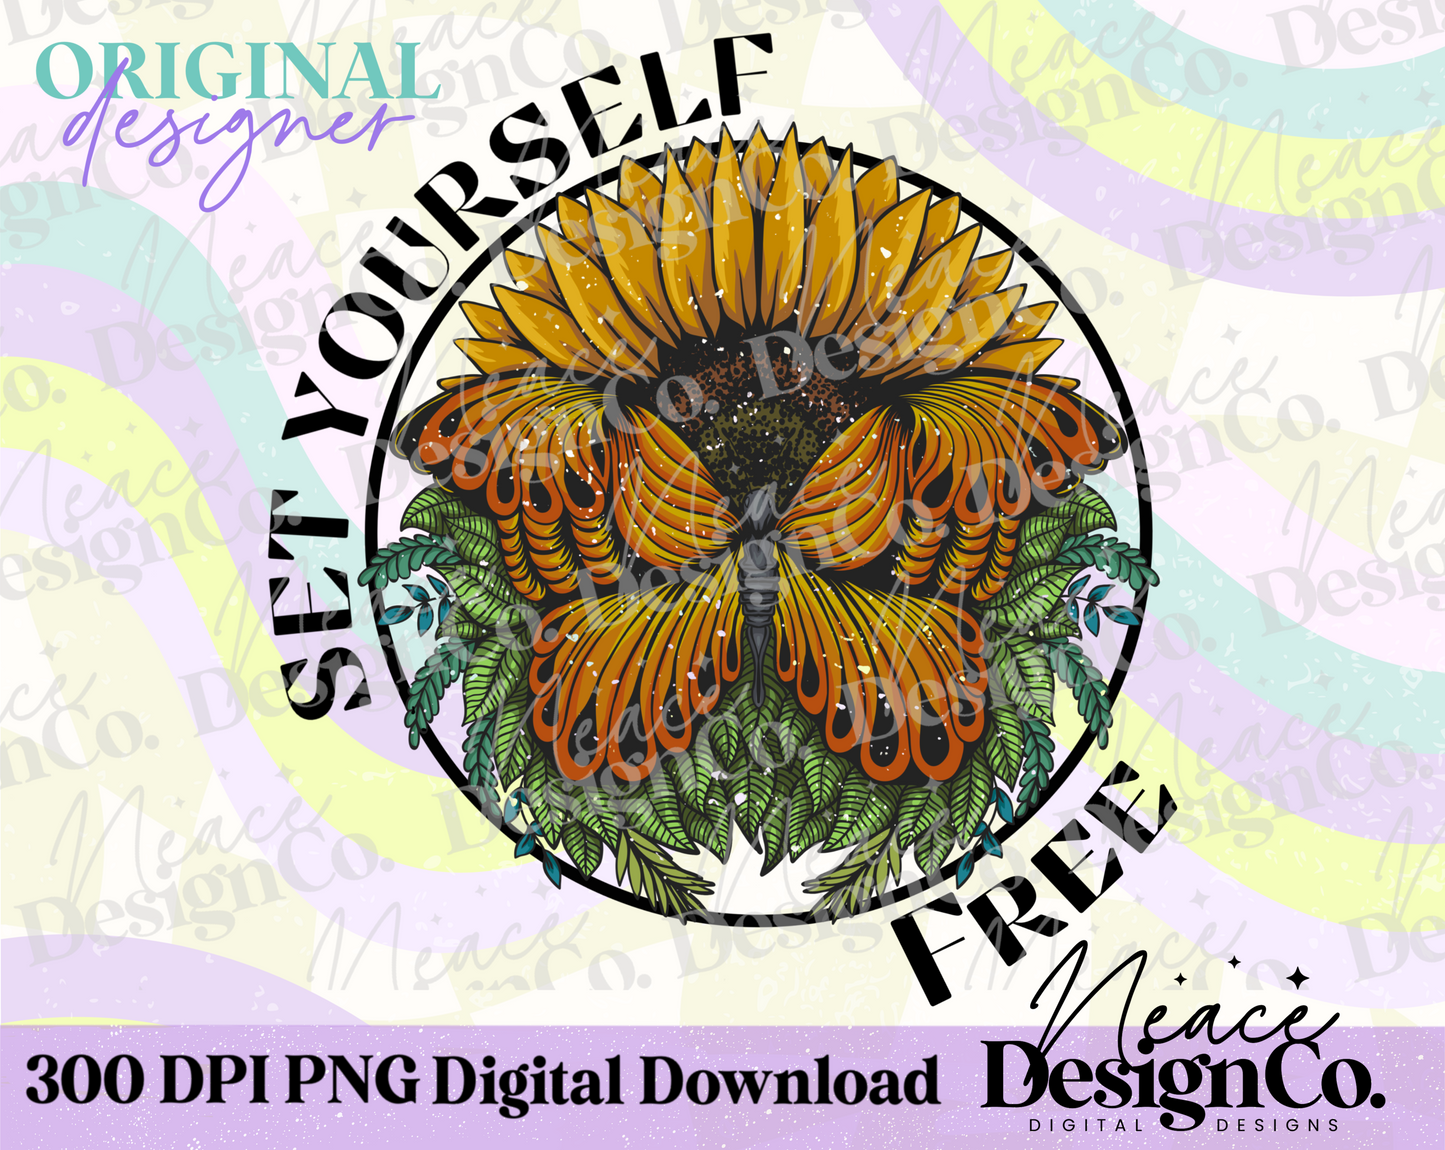 Set Yourself Free Digital PNG